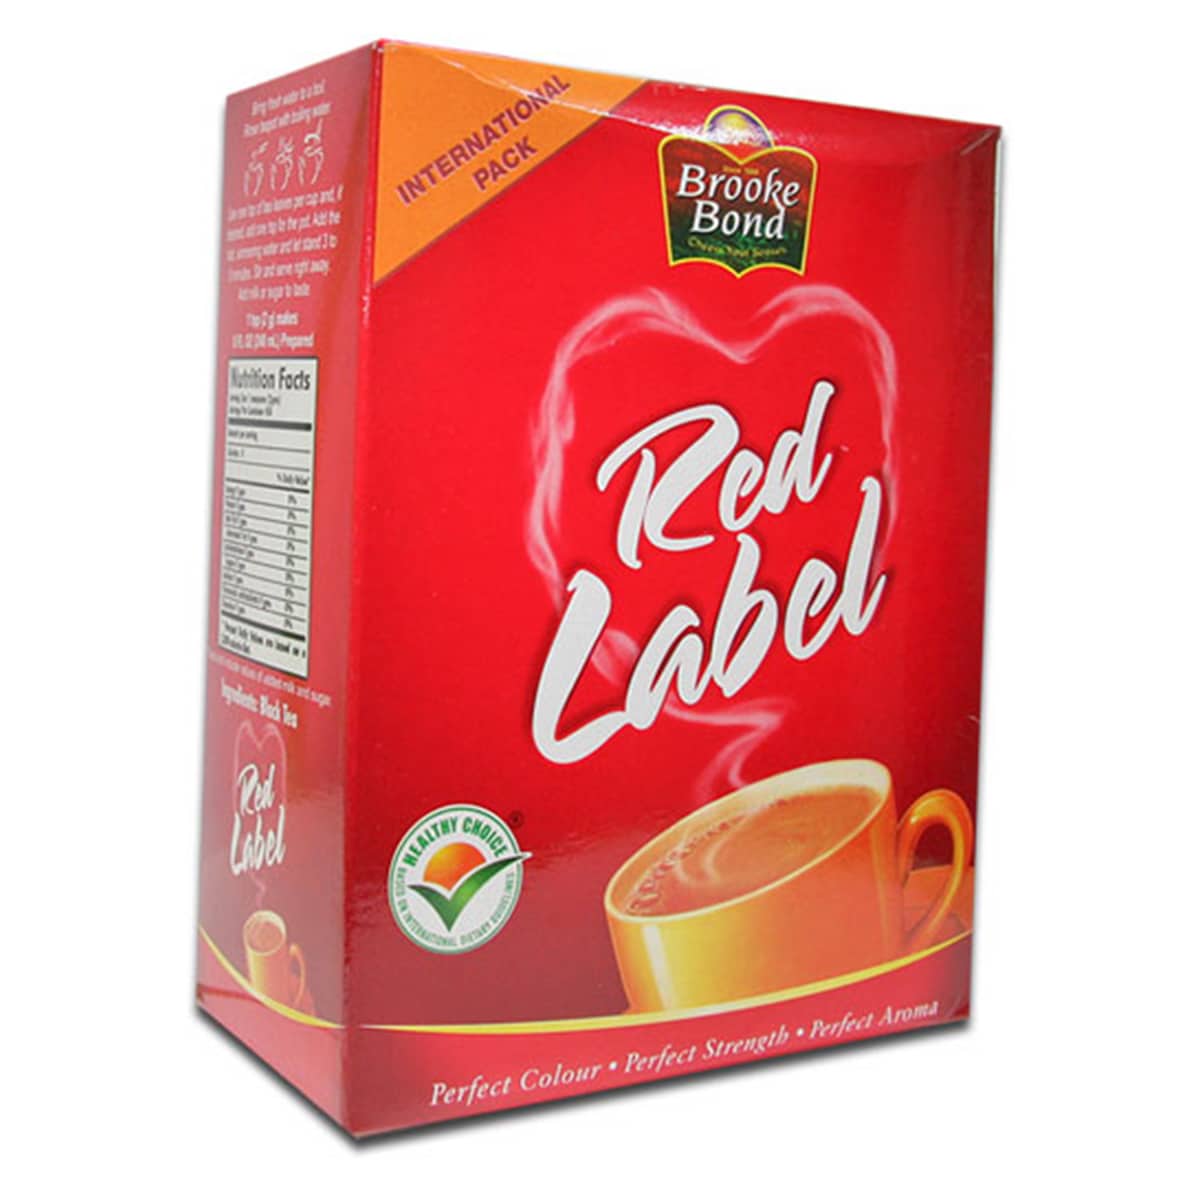 Buy Brooke Bond Red Label Tea (Loose Tea) - 900 gm